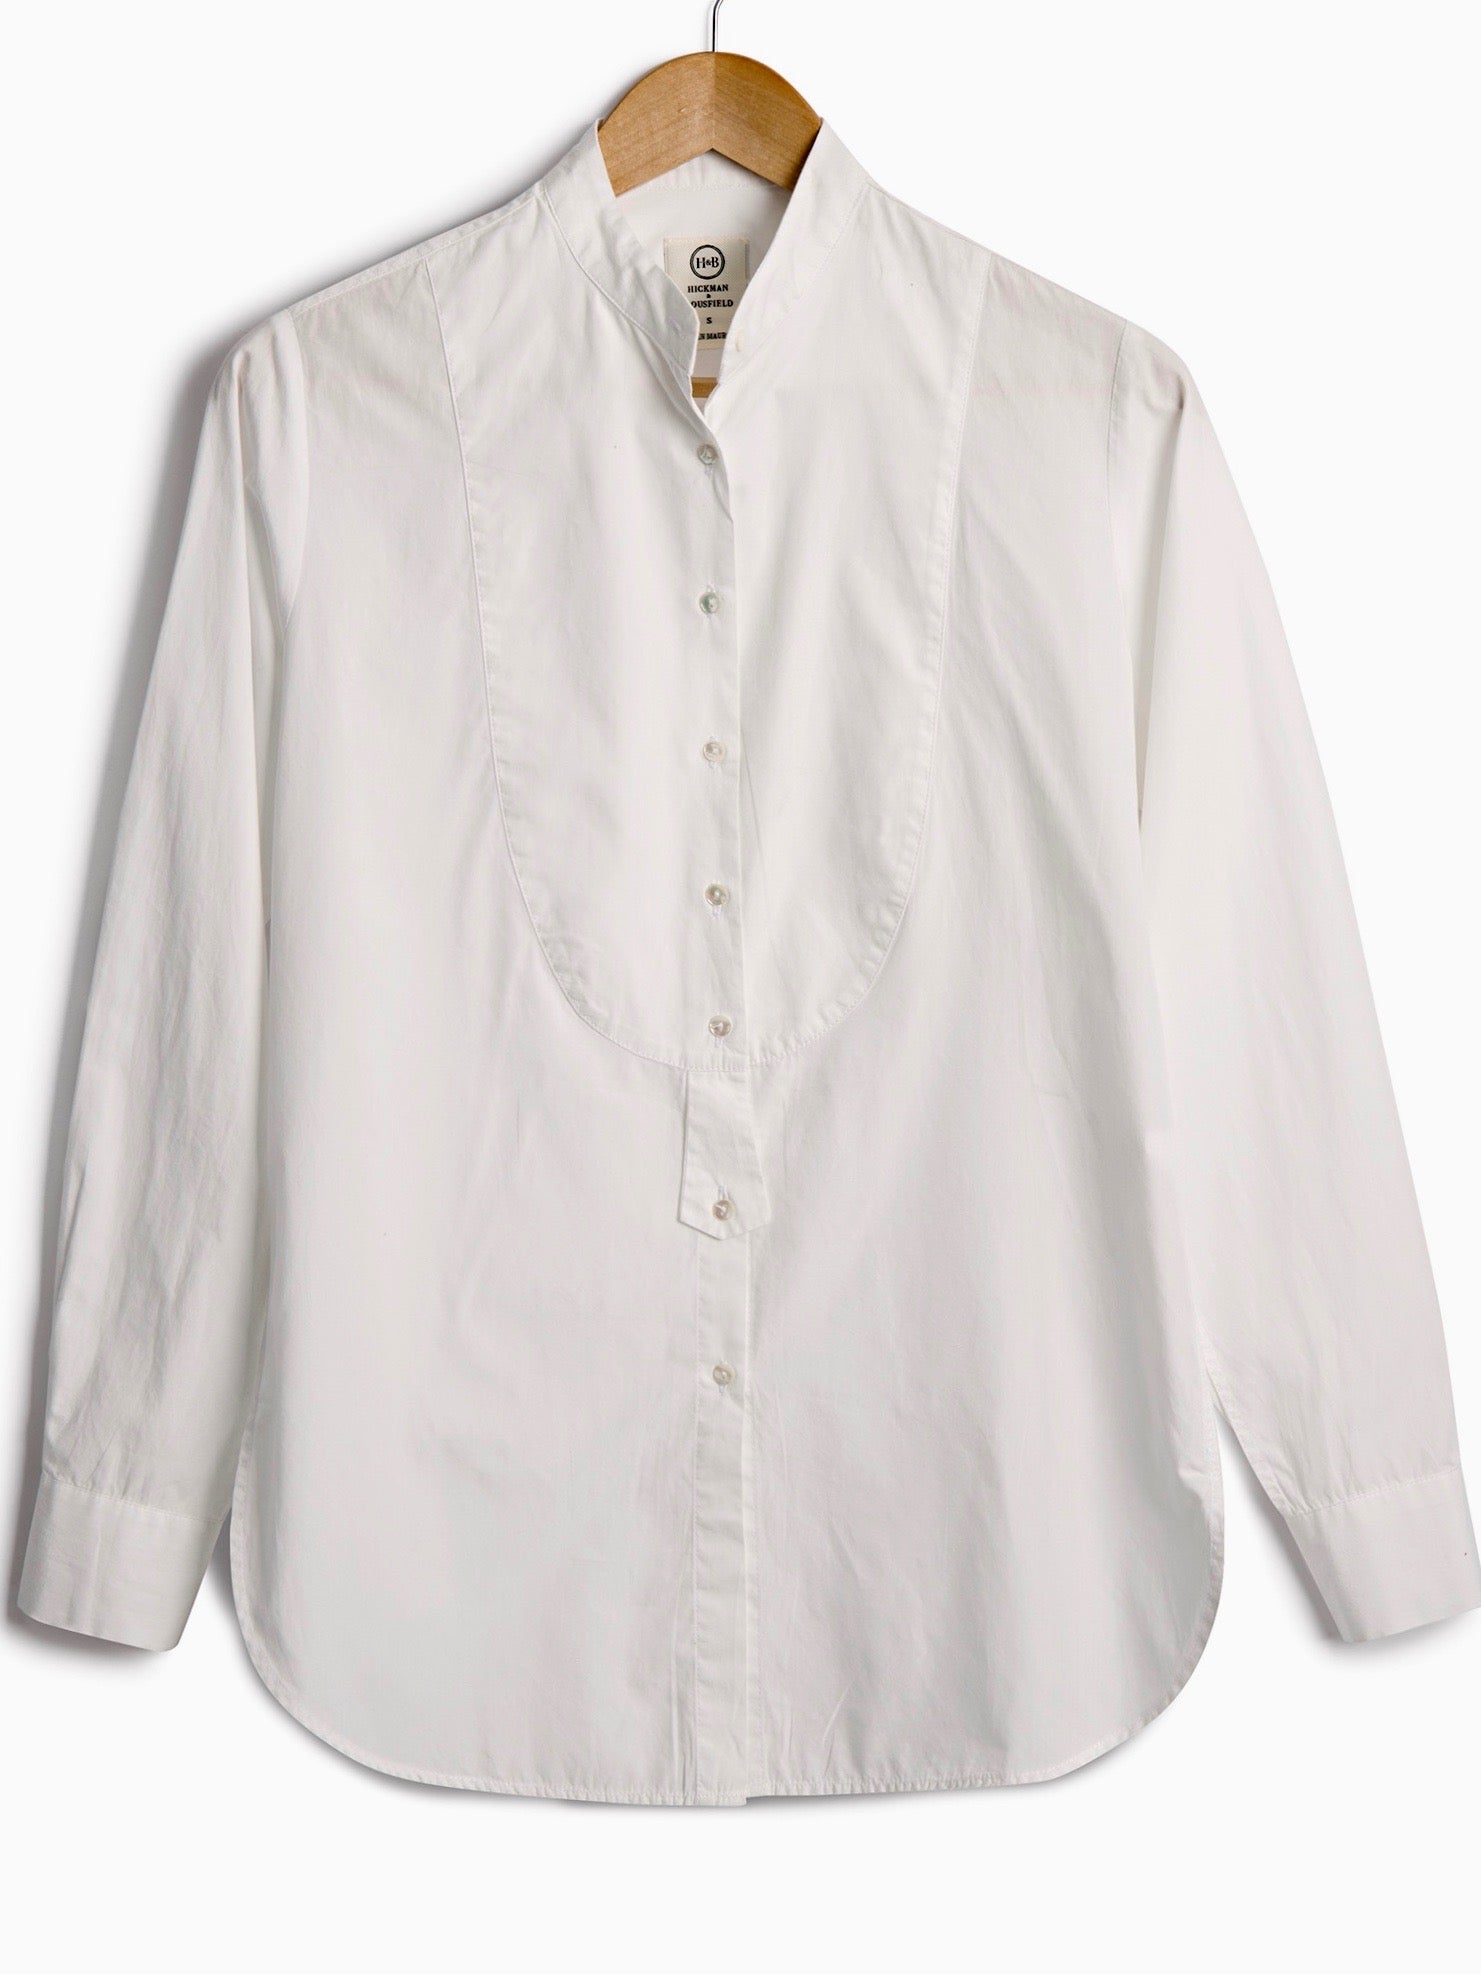 DRESS SHIRT IN WHITE POPLIN, Shirt, Hickman & Bousfield - Hickman & Bousfield, Safari and Travel Clothing